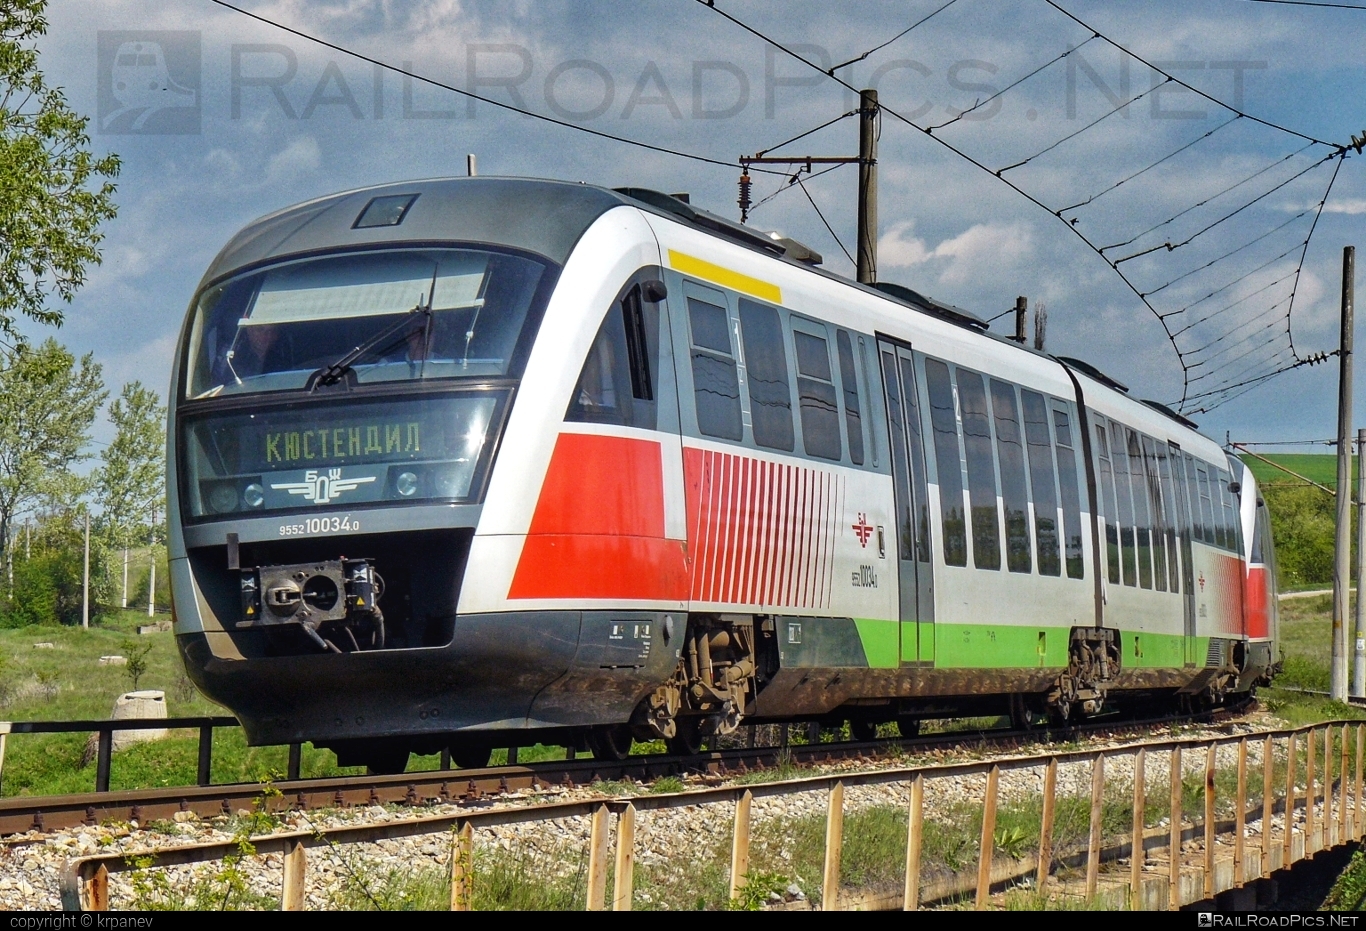 Siemens Desiro Classic - 10034.0 operated by Chemin de fer de l'Etat bulgare - Bulgarski Durzhavni Zheleznitsi #bdz #bridge #desiro #desiroclassic #siemens #siemensdesiro #siemensdesiroclassic